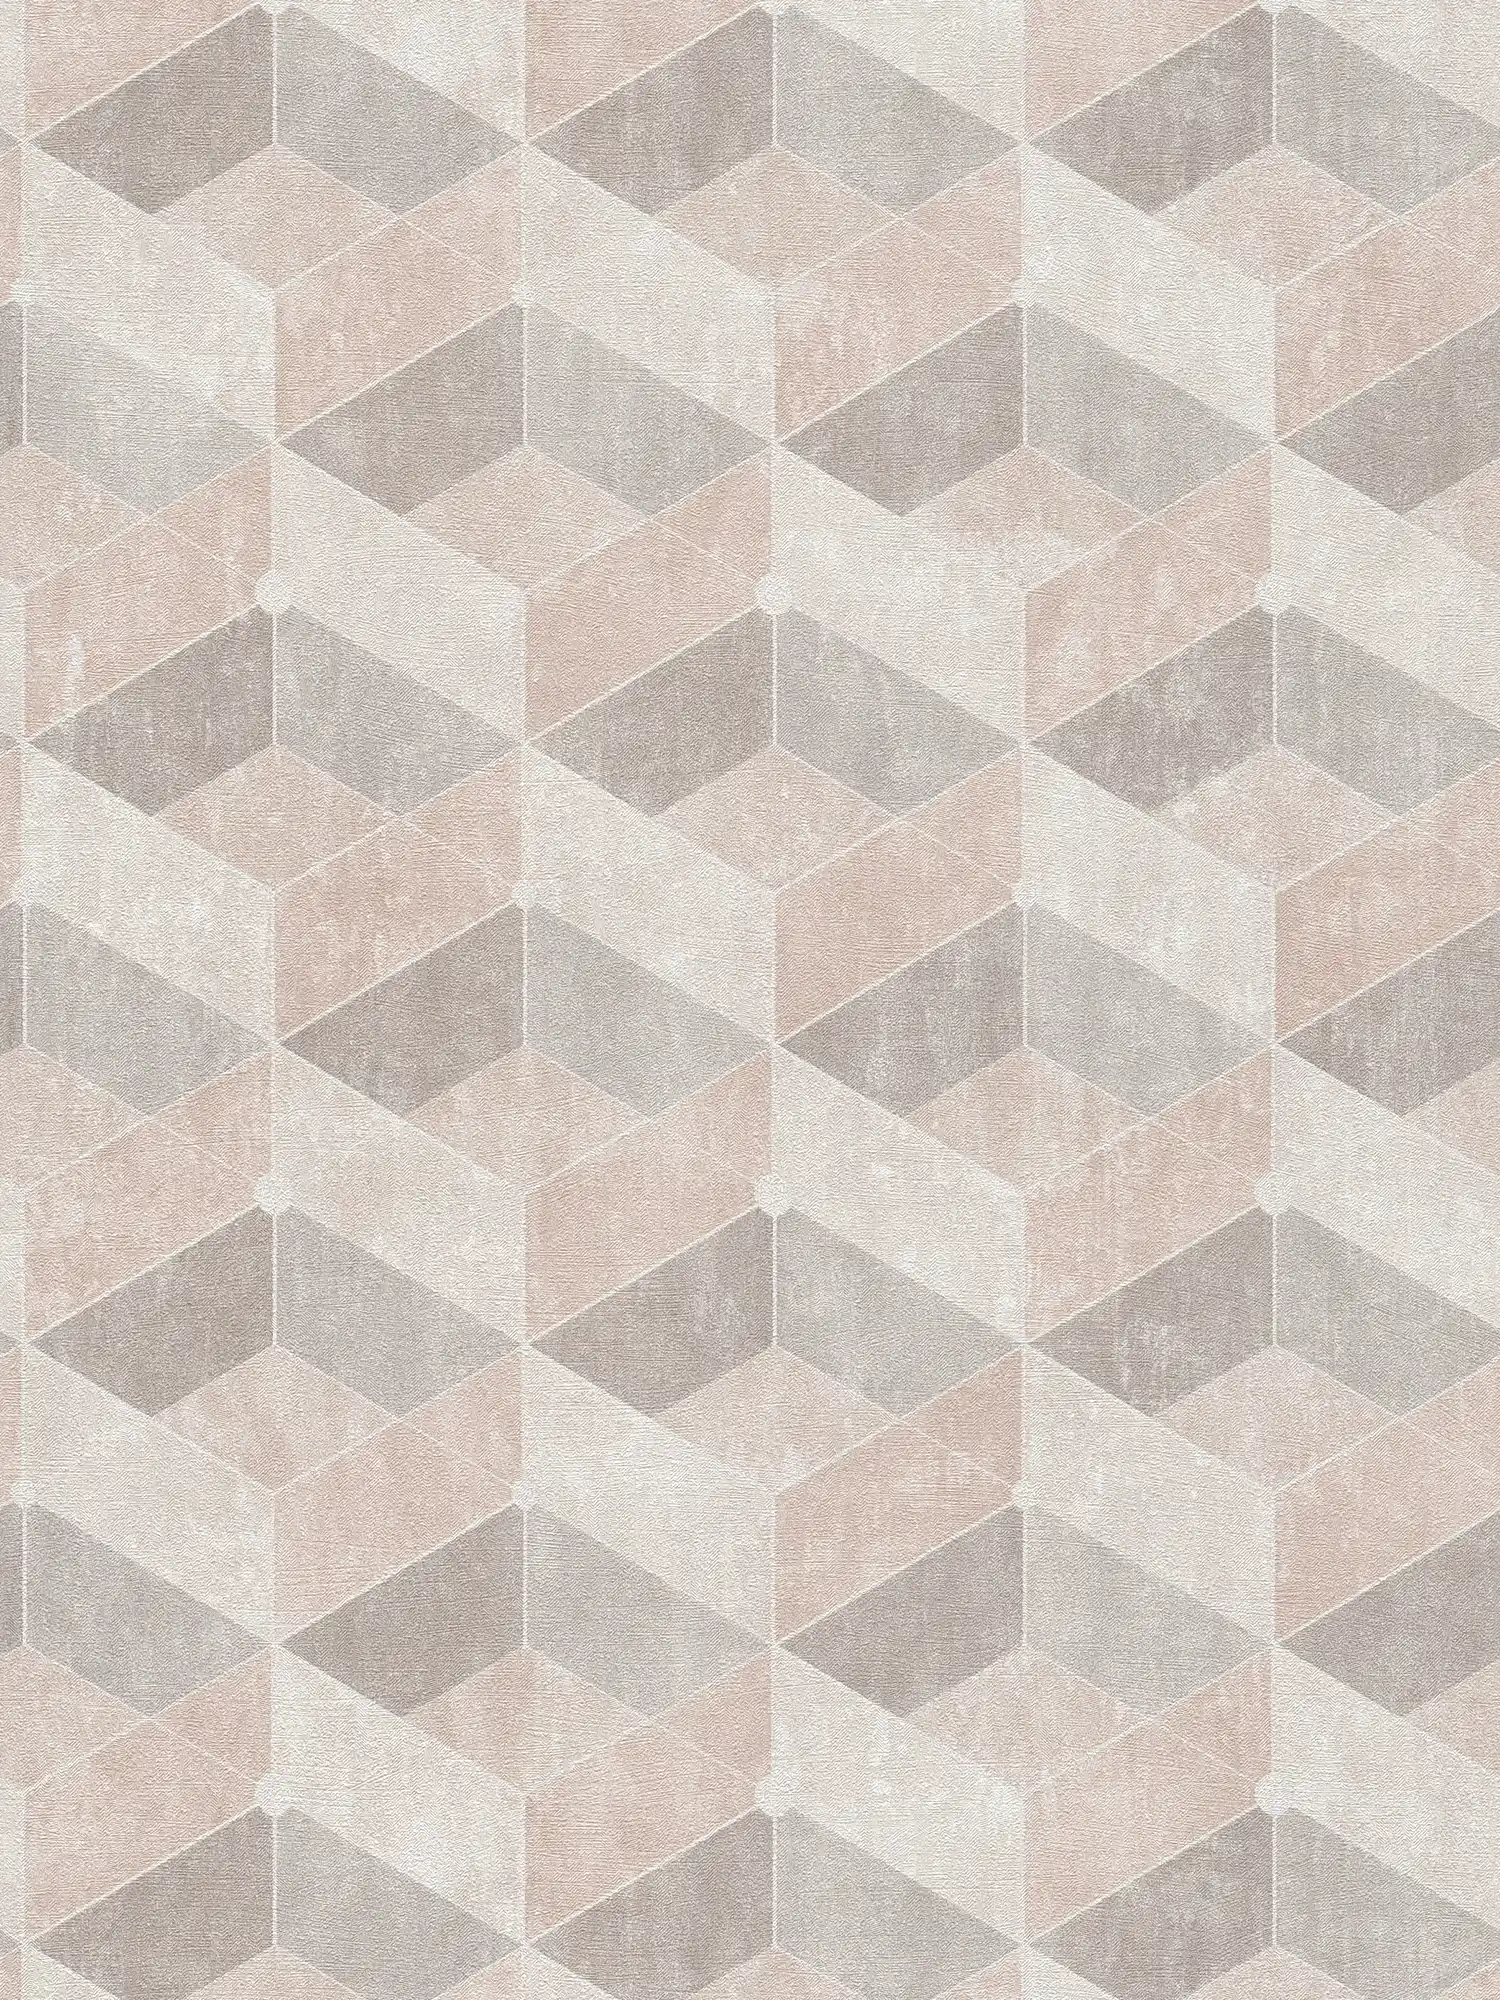 Pattern wallpaper diamonds in retro design - beige, brown, cream
